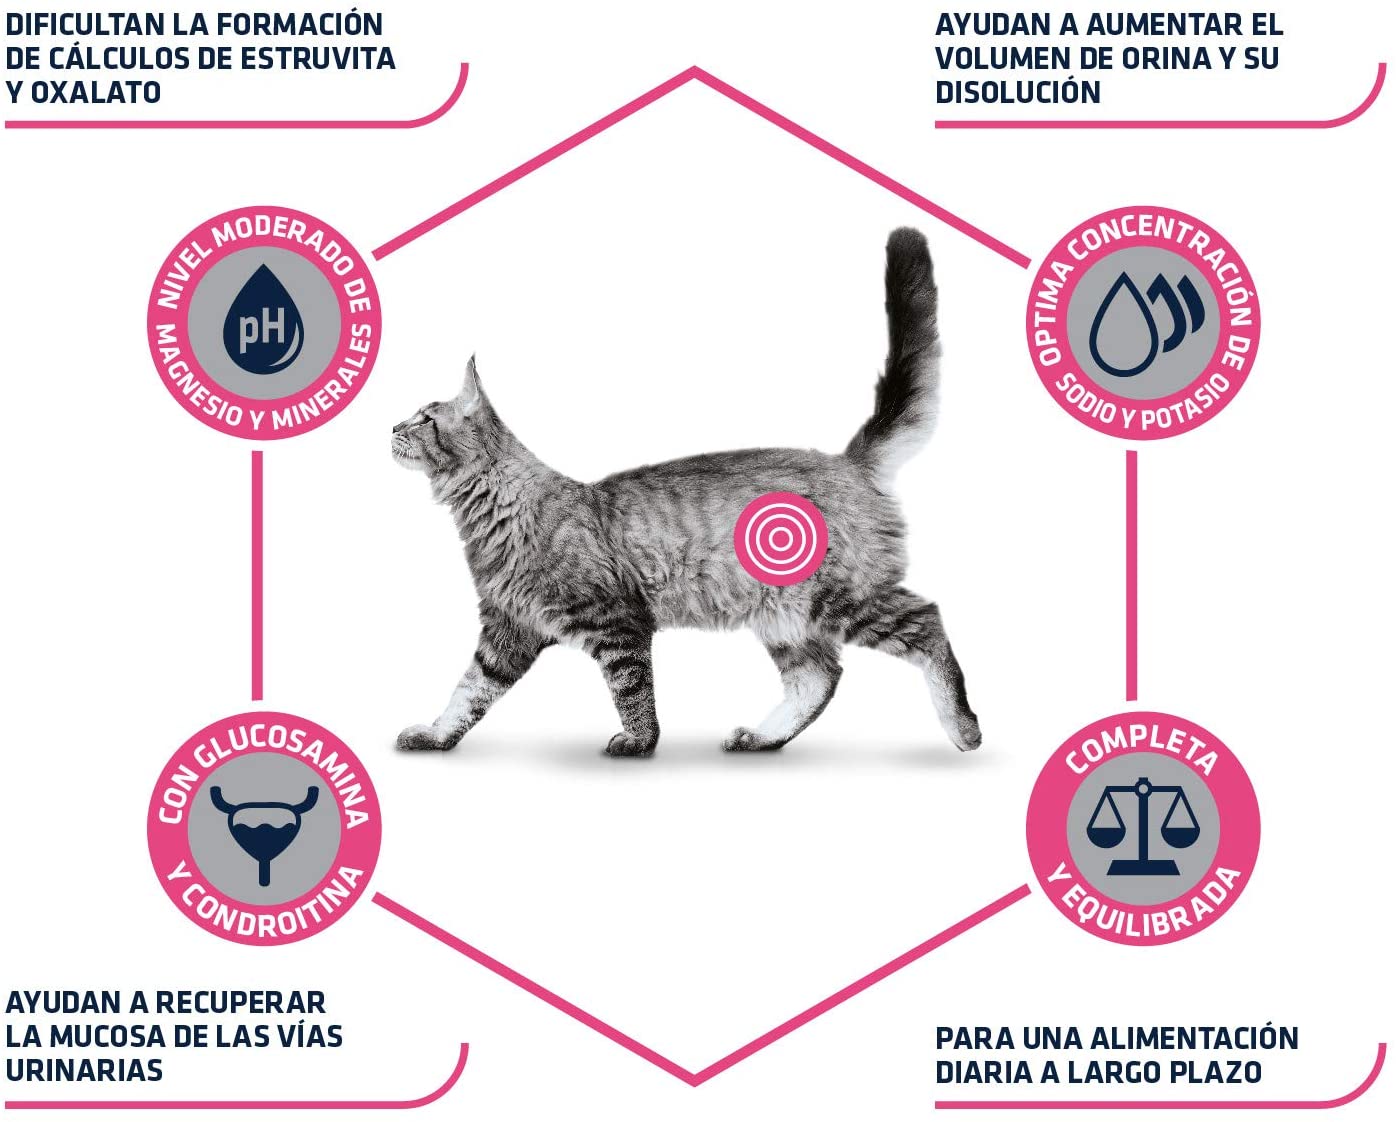  Advance Veterinary Diets Urinary - Pienso para Gatos con Problemas urinarios - 8 kg 